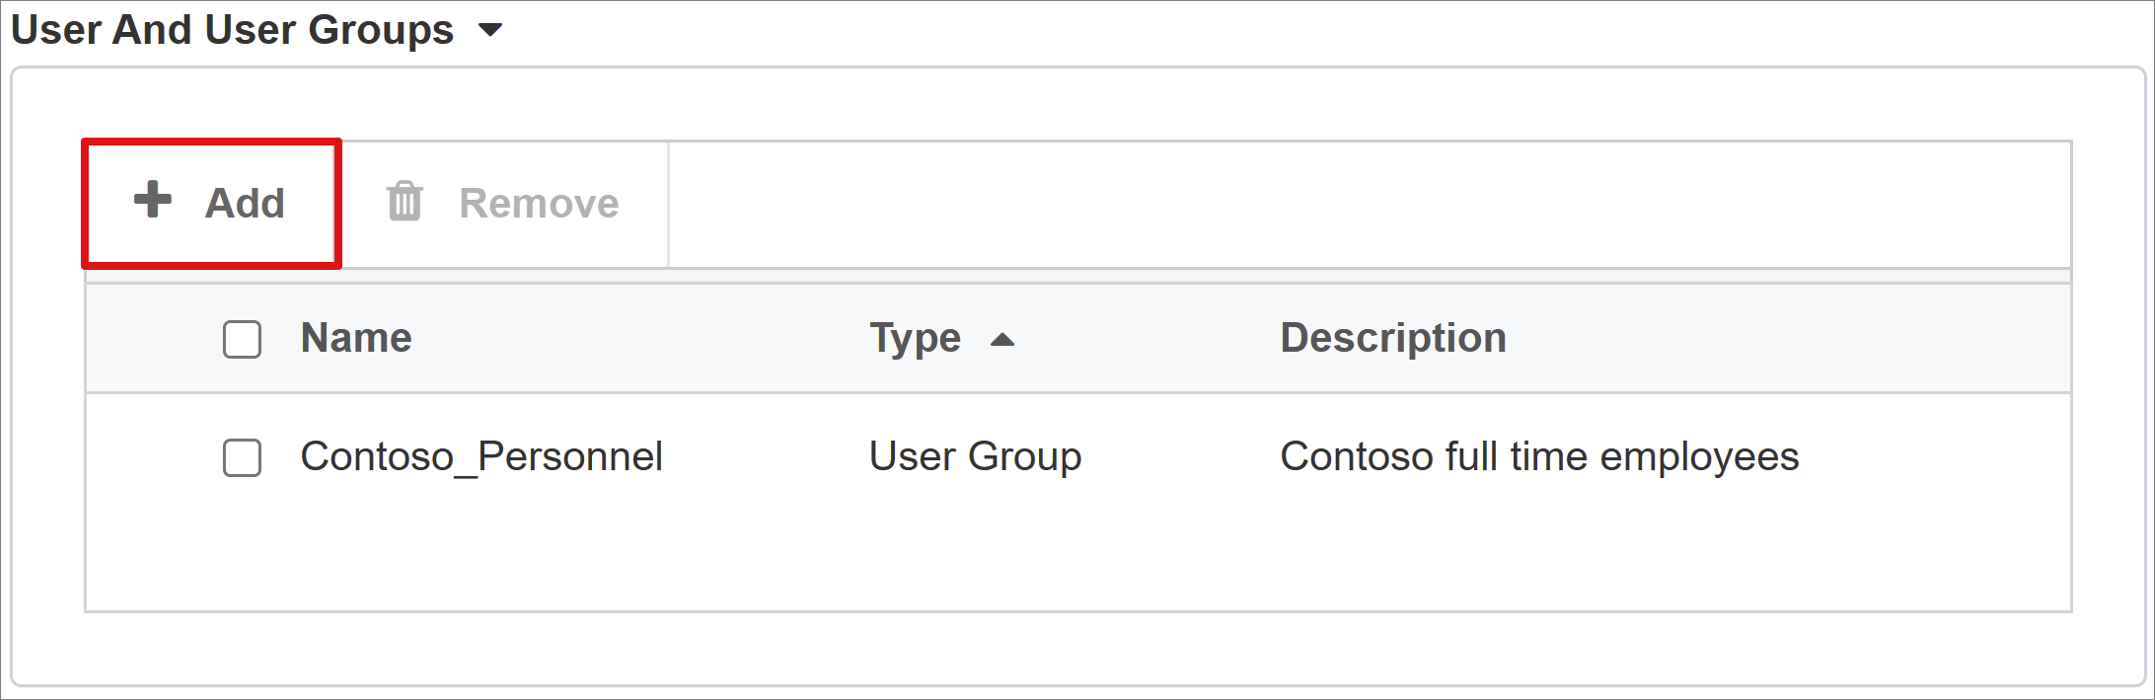 [User And User Groups] (ユーザーとユーザー グループ) の [Add] (追加) オプションのスクリーンショット。